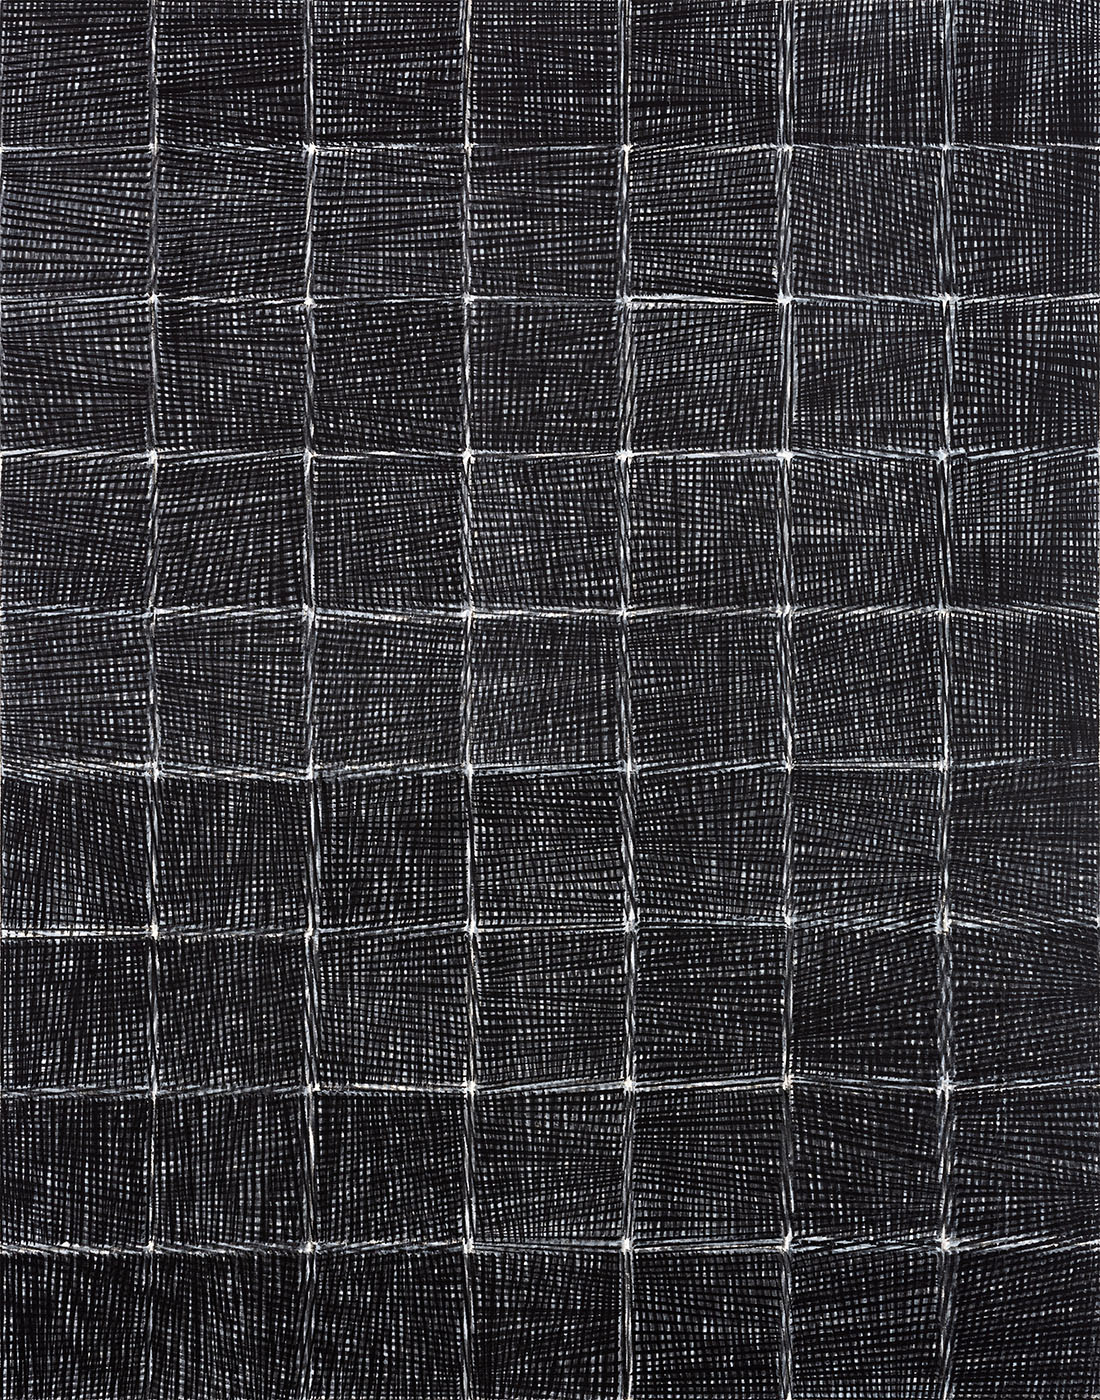 Nikola Dimitrov, Fuge IV, 2021, Pigmente, Bindemittel auf Leinwand, 140 × 110 cm